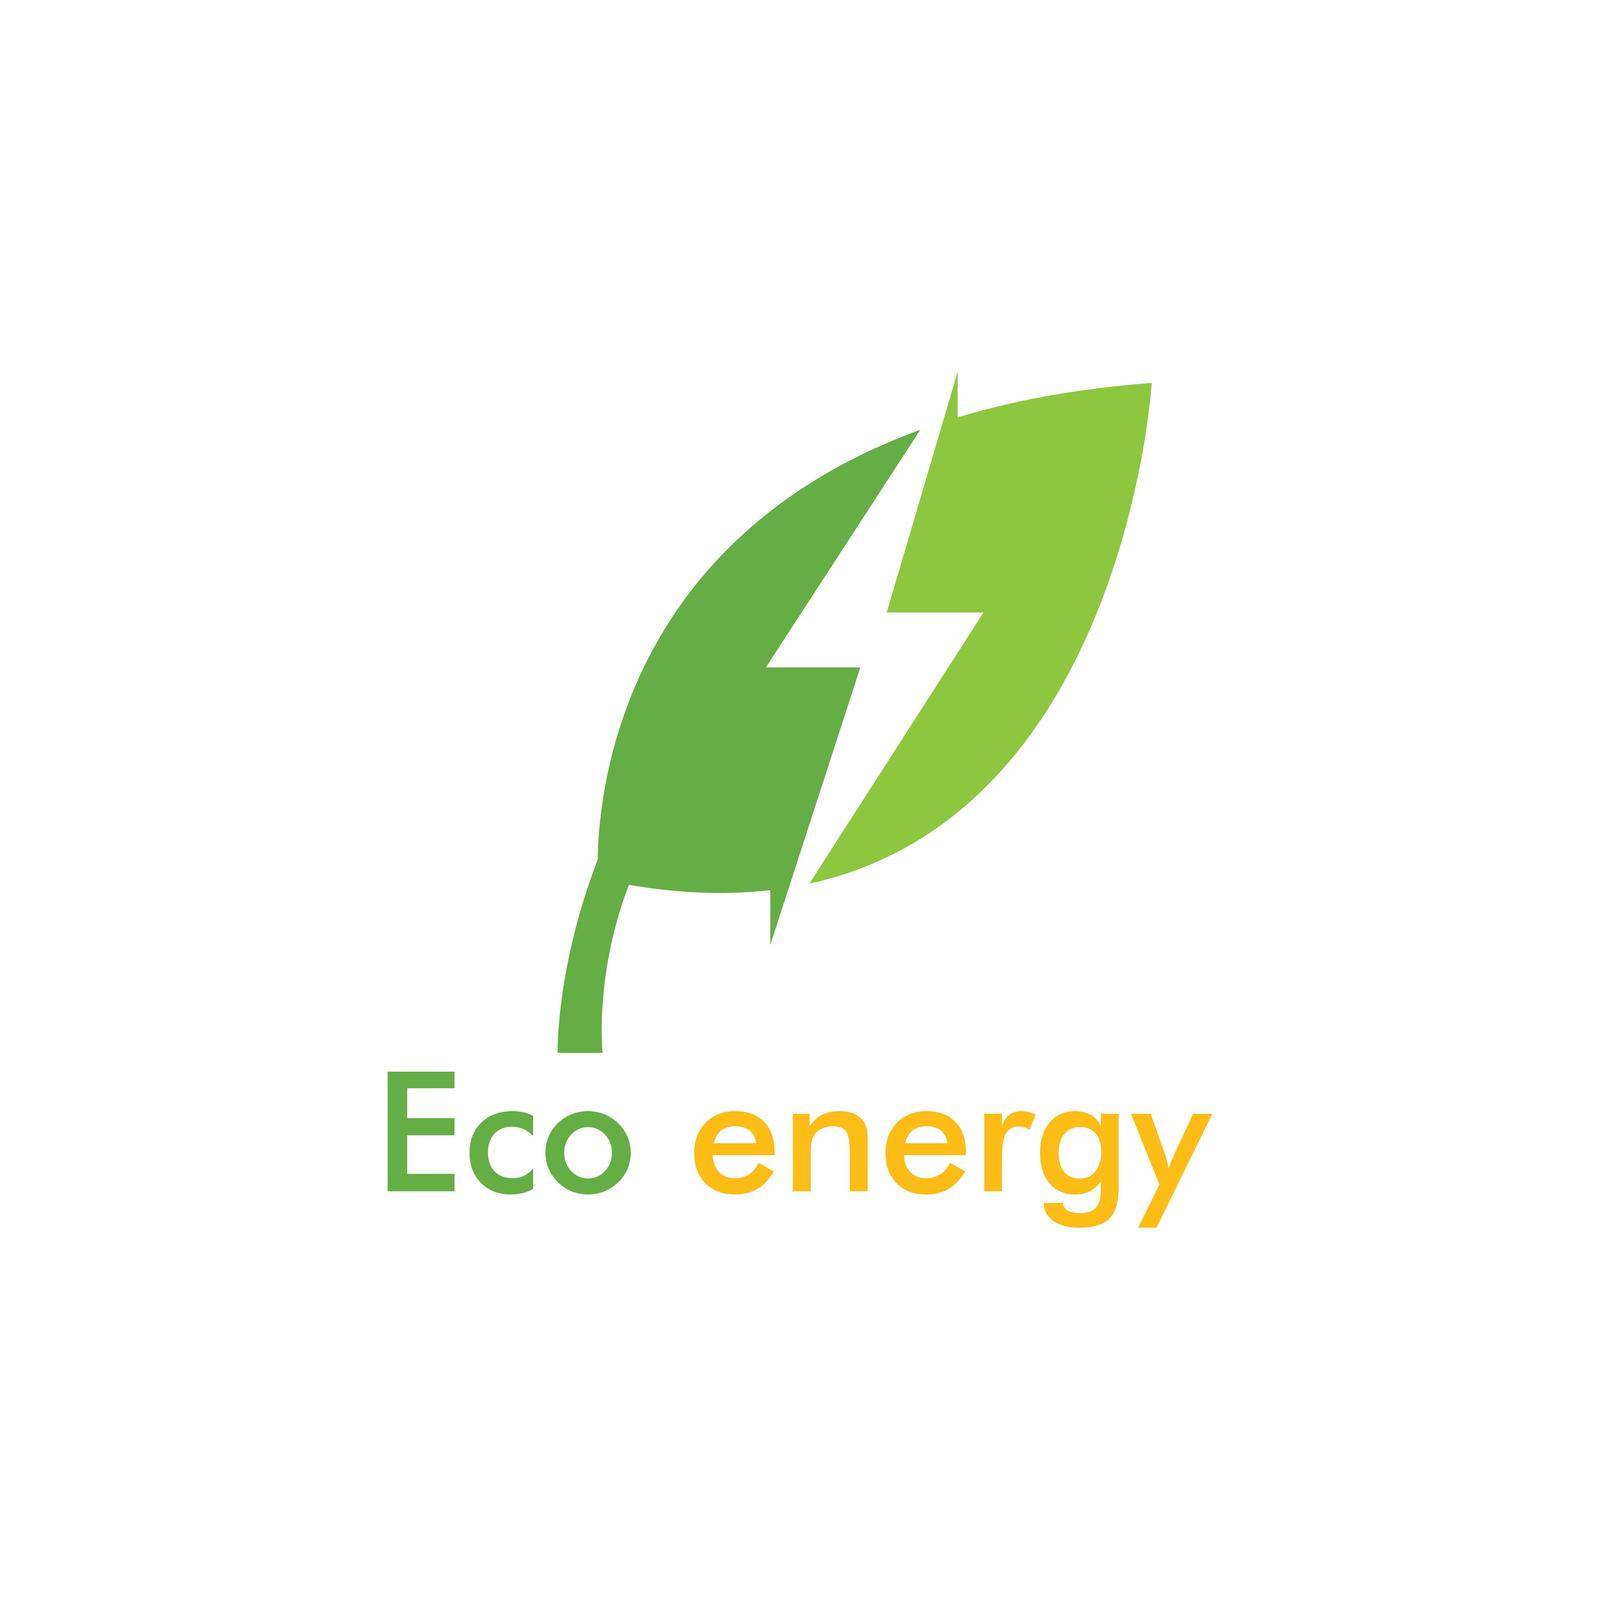 Eco energy Logo Template vector icon illustration design